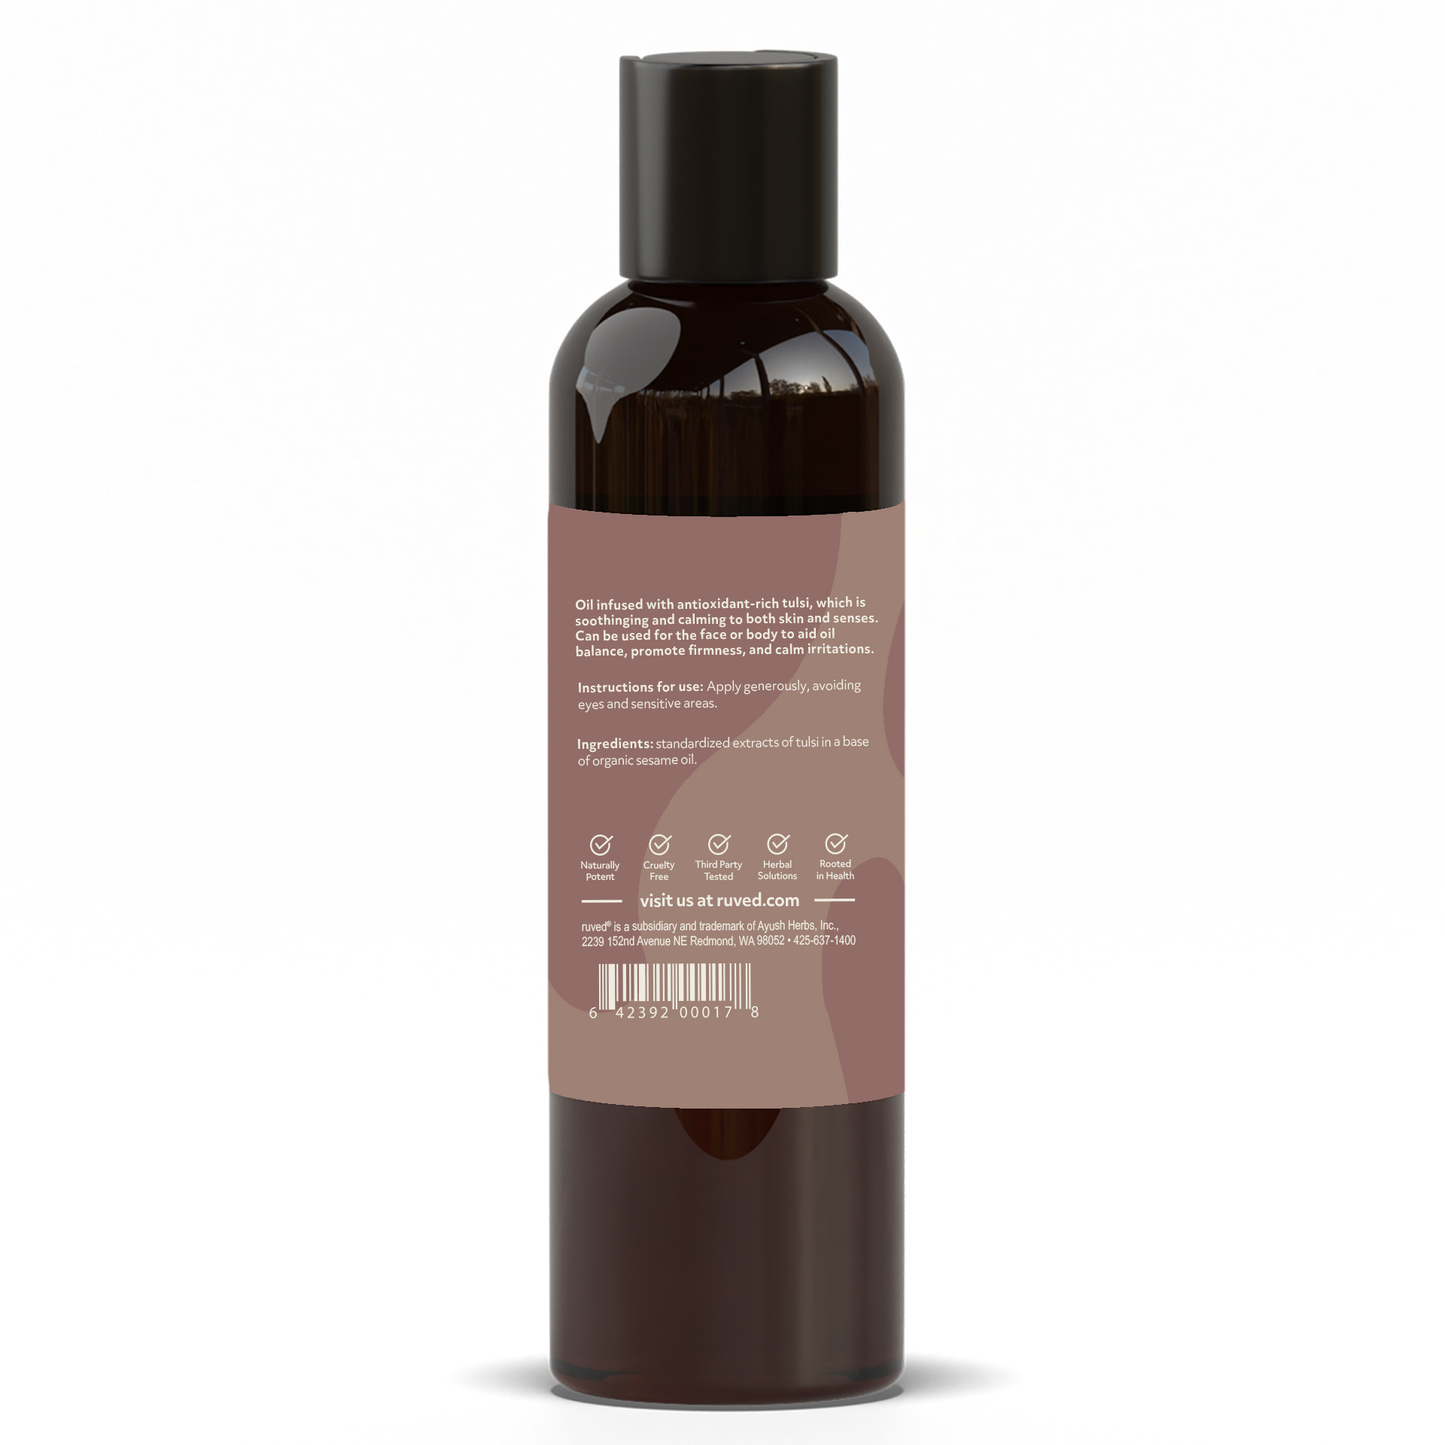 Tulsi Body Oil Supplement Facts Back Side- Organic Holy Basil Infused Oil, 100ml Bottle, Nourishing Herbal Skincare for Radiant Skin.